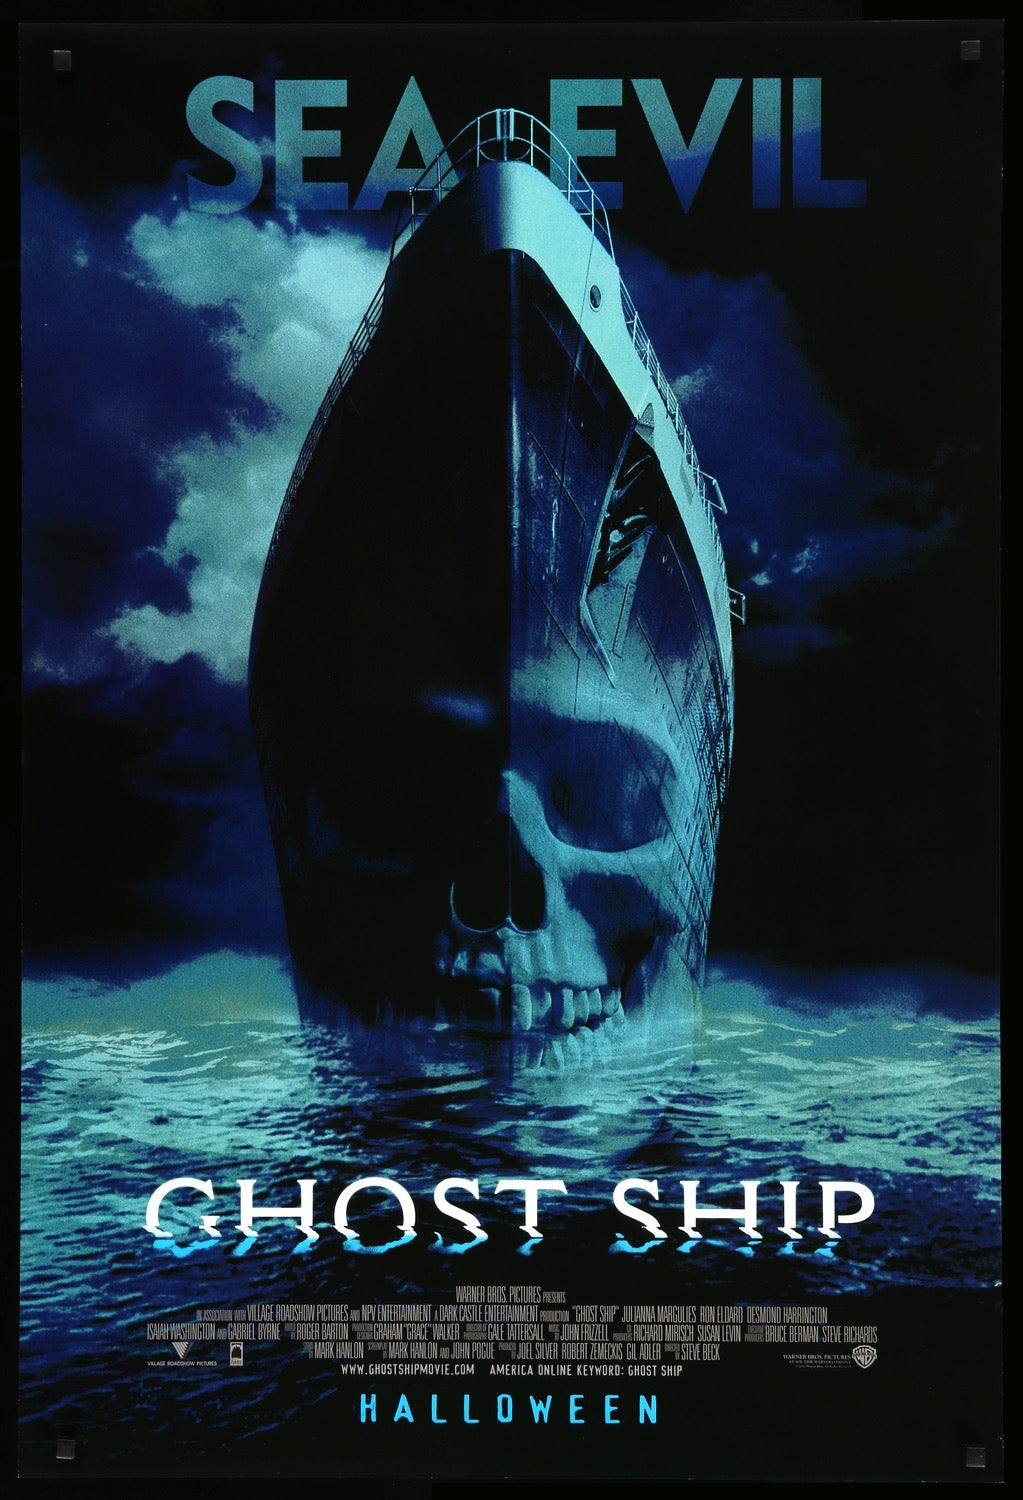 Ghost Ship (2002) original movie poster for sale at Original Film Art